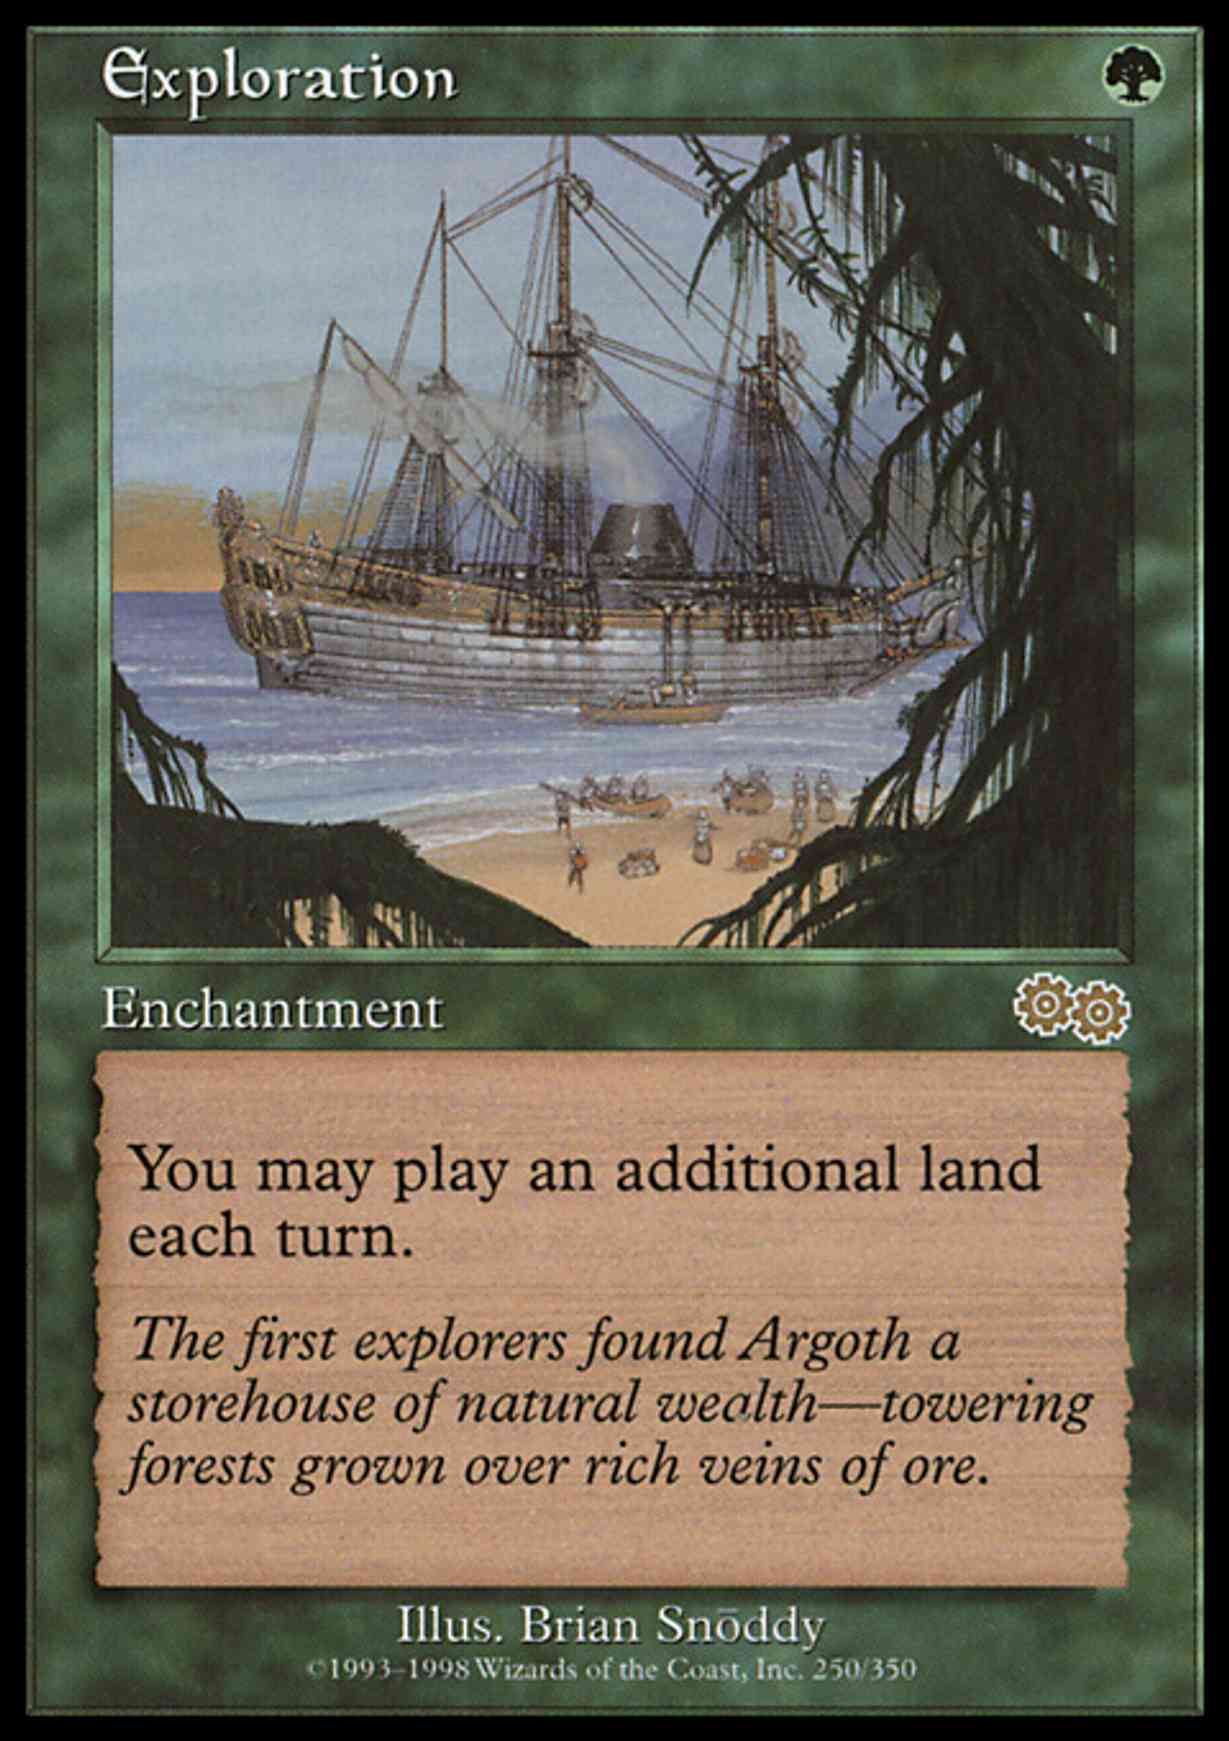 Exploration magic card front